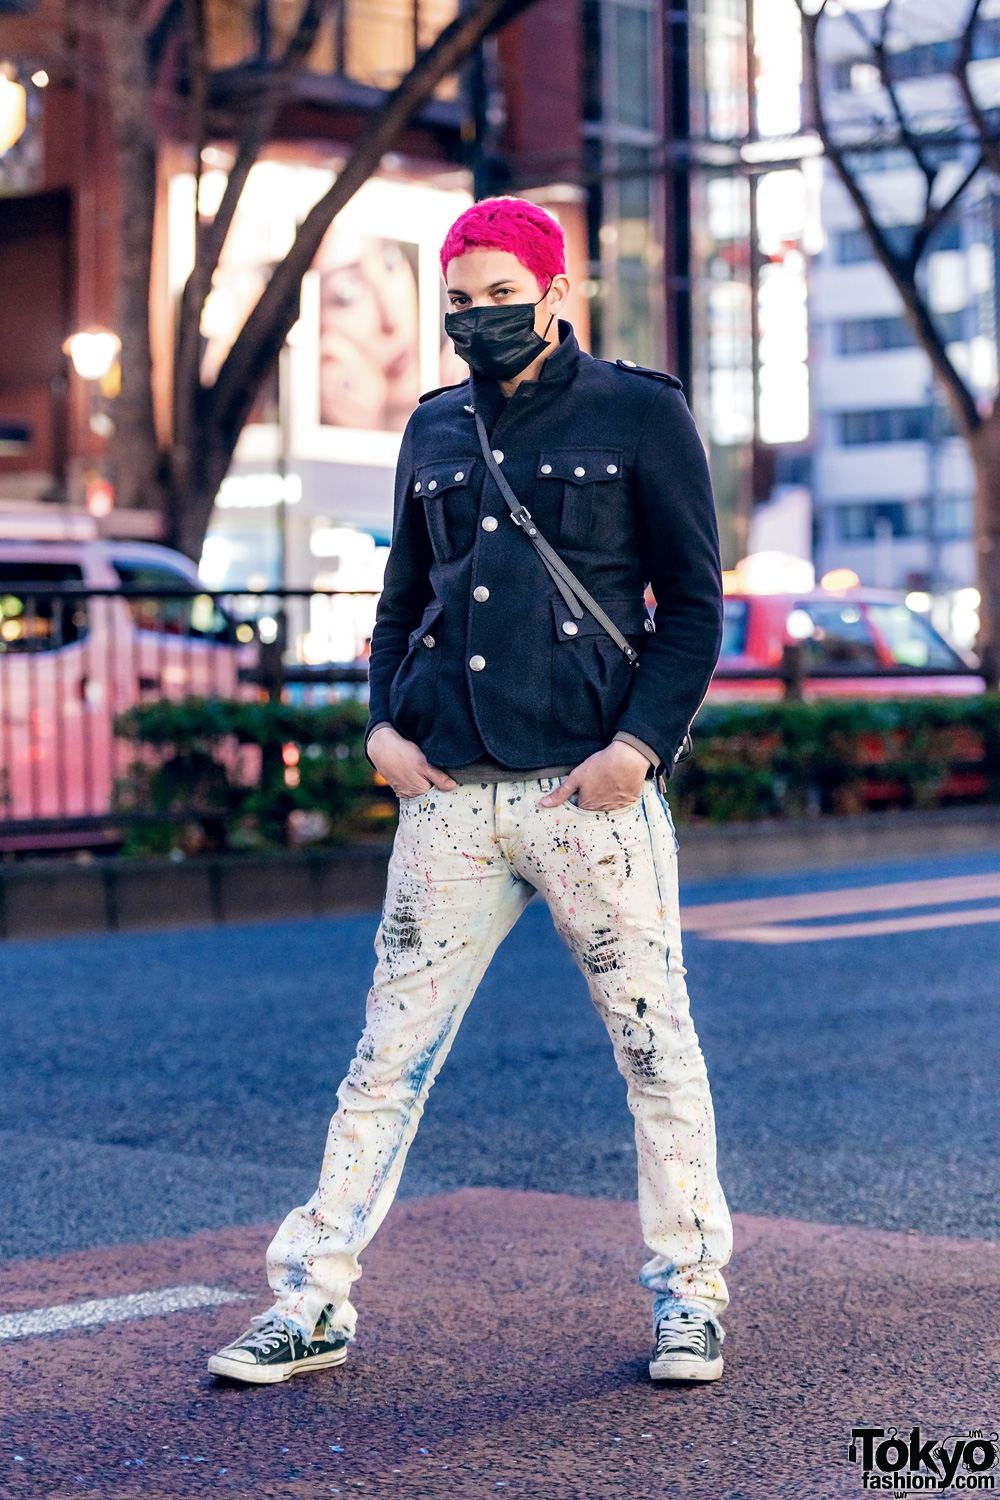 Gab3 in Harajuku w/ Pink Hair, Face Mask, Military Jacket, Vlone, Beams, Converse & Vivienne Westwood Bag